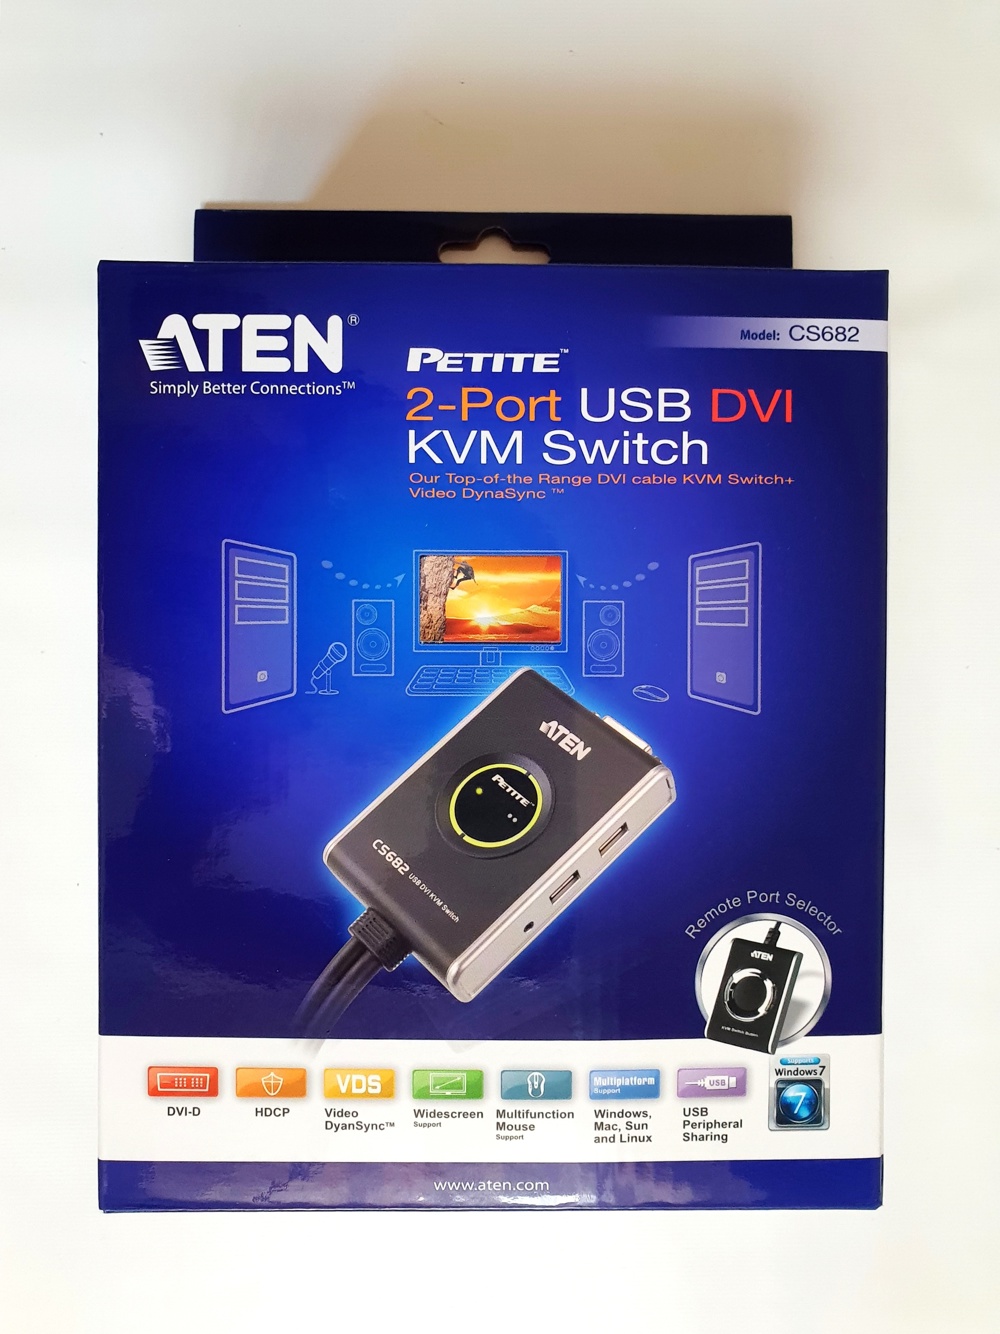 ATEN PETITE 2-Port USB DVI KVM Switch Monitorumschalter